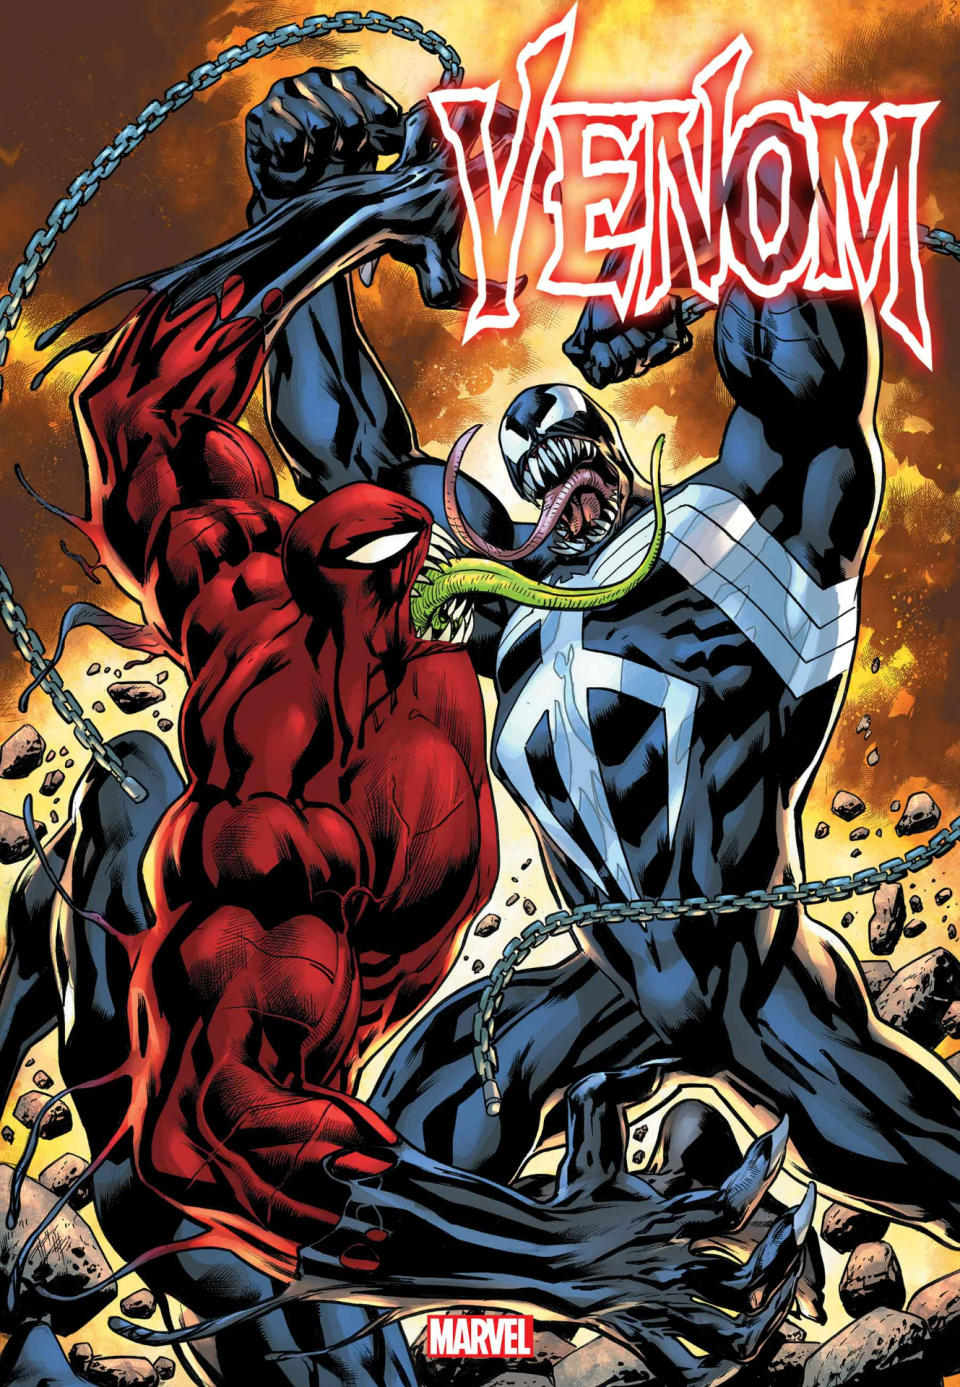 Venom #23 cover art